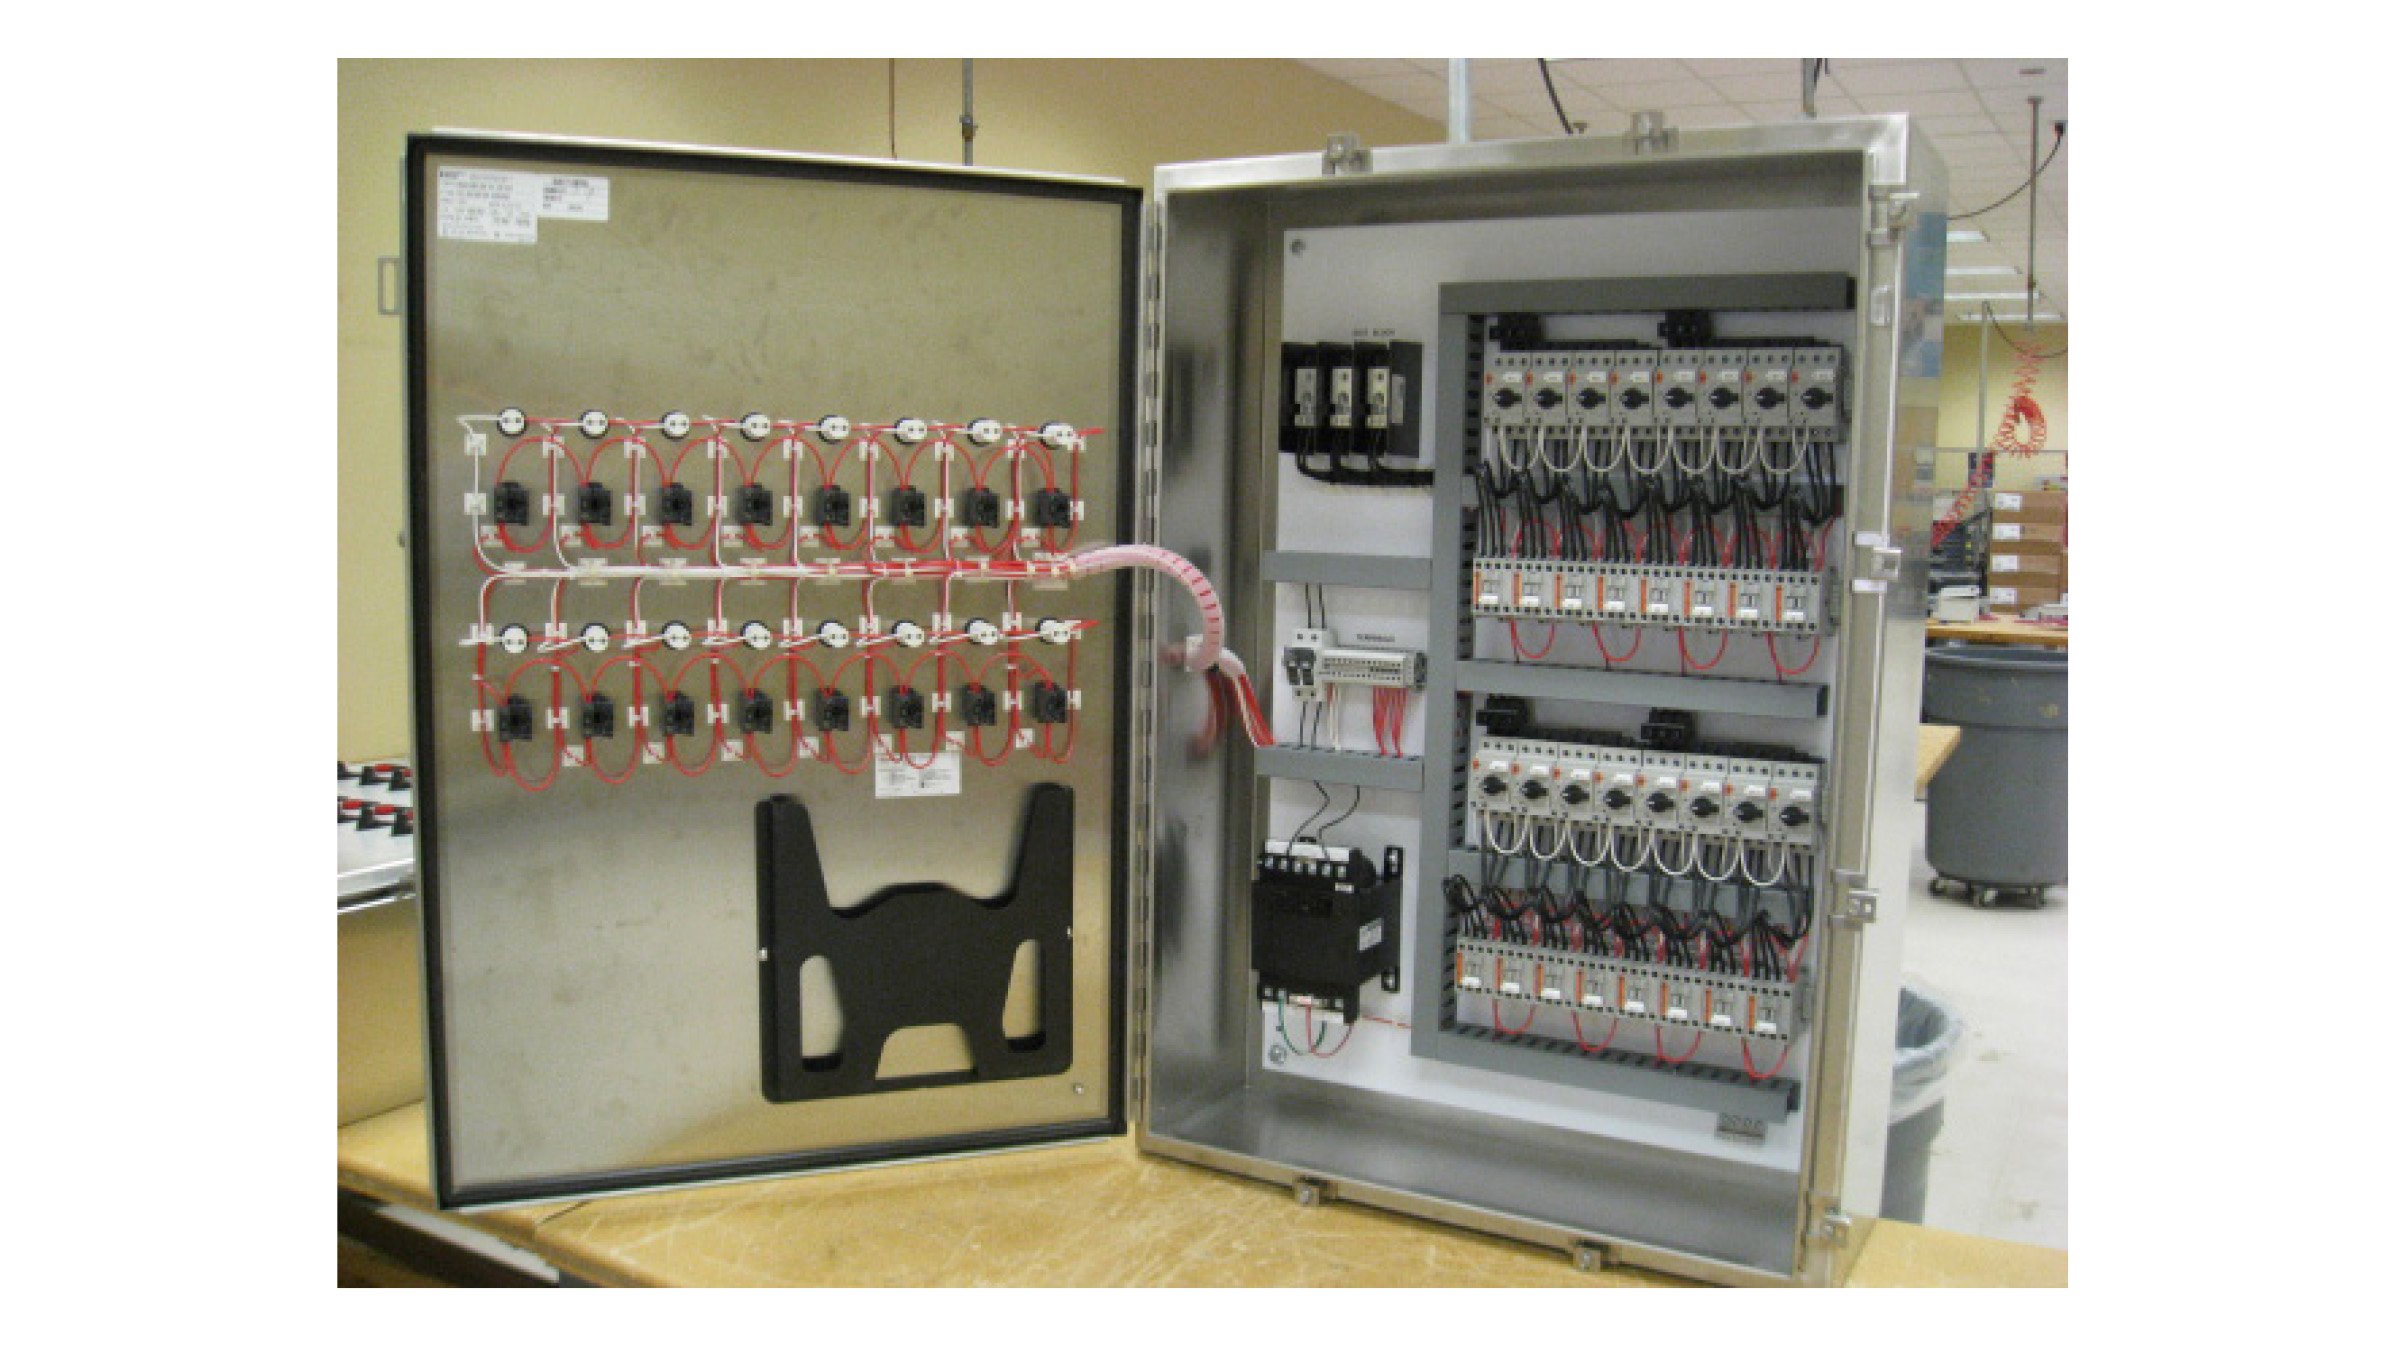 Hobbs multi-motor control panel for steam plant ventilation